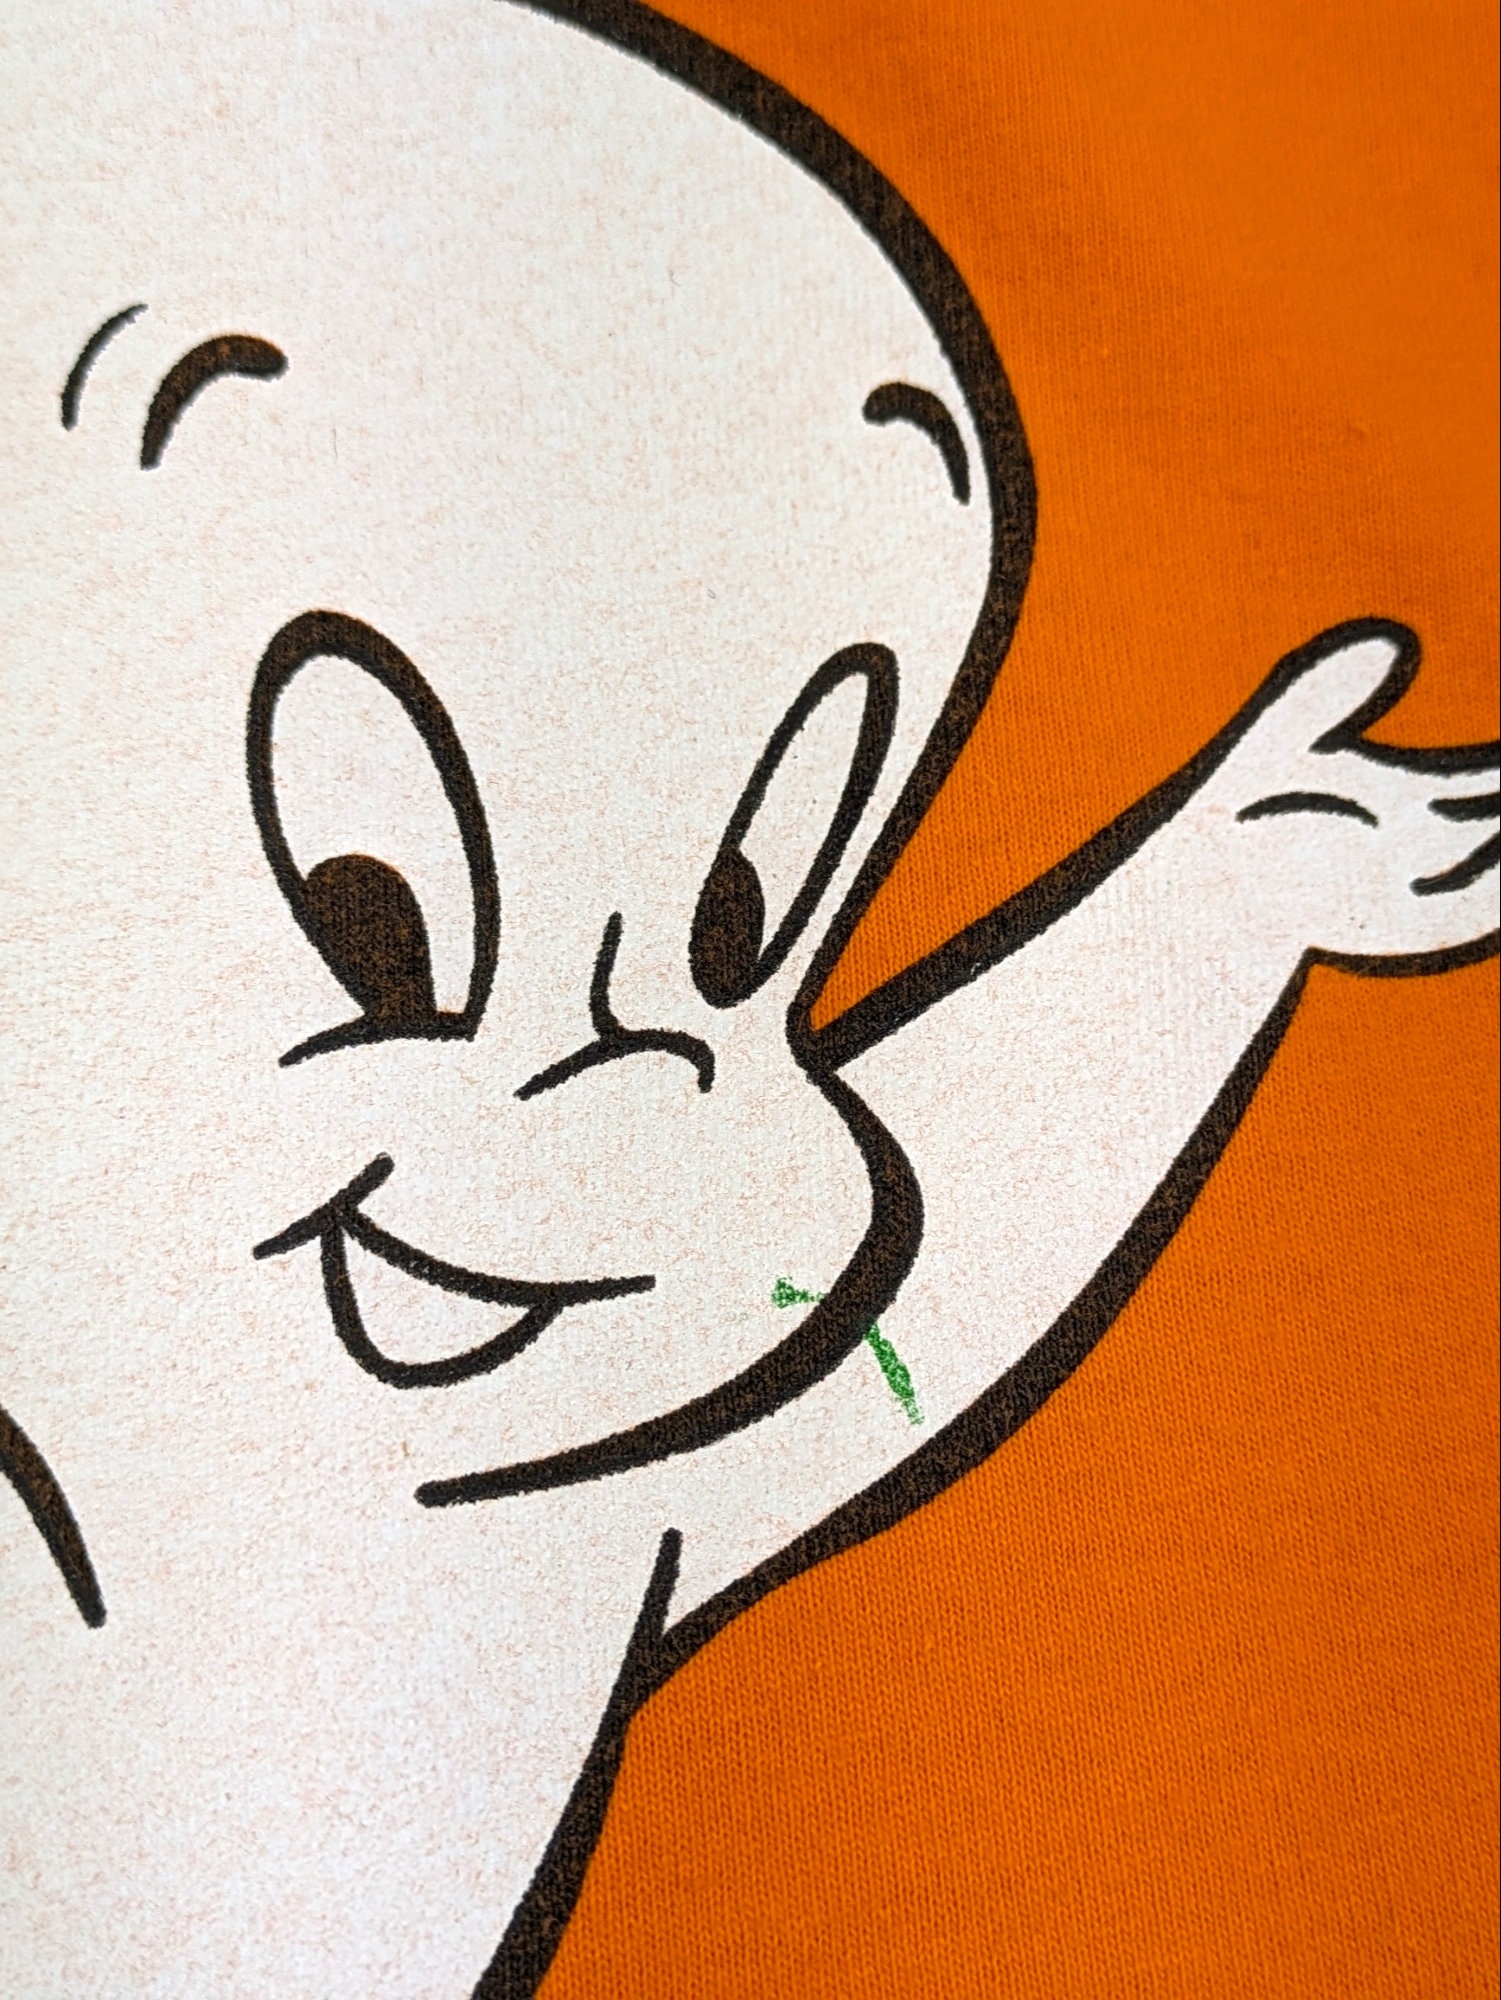 Casper the Friendly Ghost True Boo T Shirt Mens Licensed Cartoon